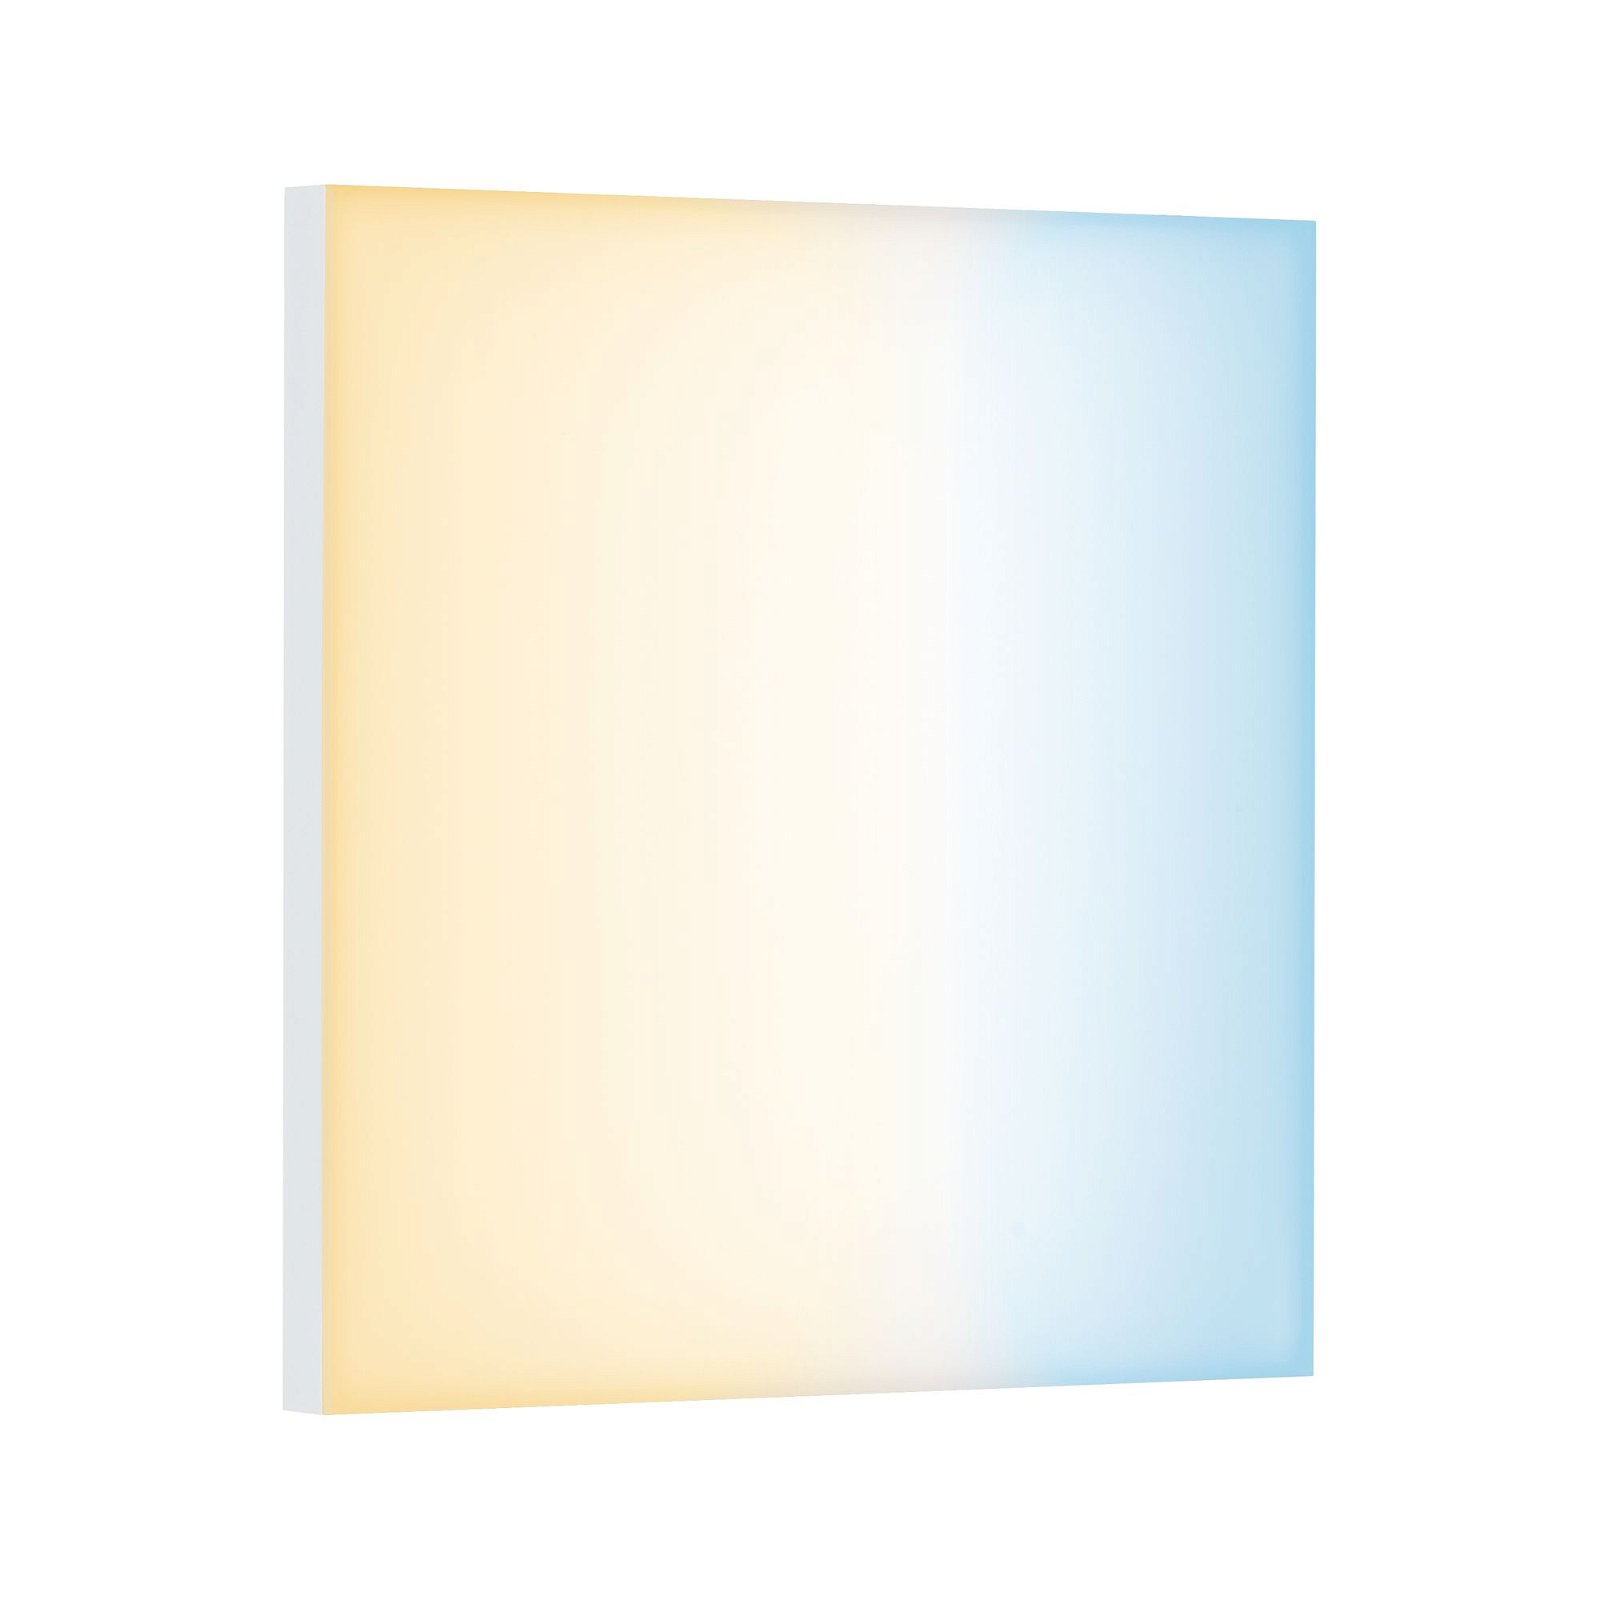 LED Panel Smart Home Zigbee Velora square 295x295mm Tunable White Matt white dimmable